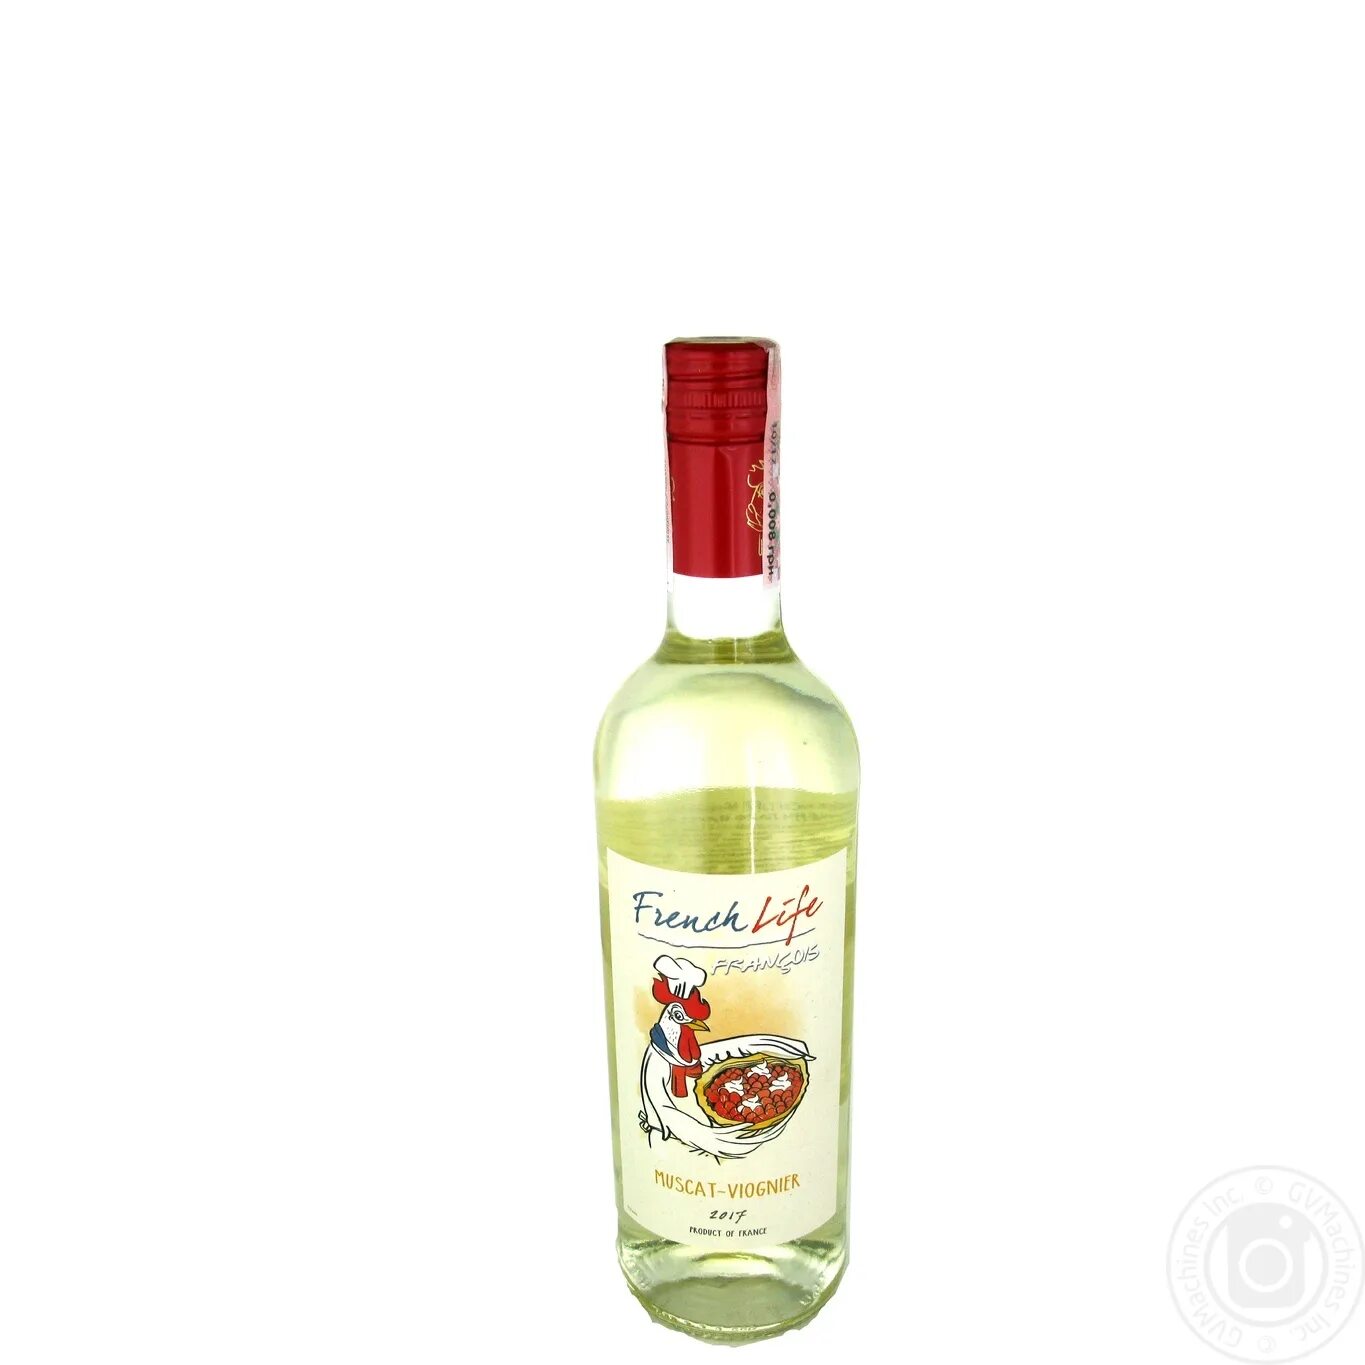 French life. French Life вино Vermentino. Вино French Life Muscat Viognier, 0.75 л. Френч лайф Верментино-Коломбар. Вино с петухом Франция French Life.